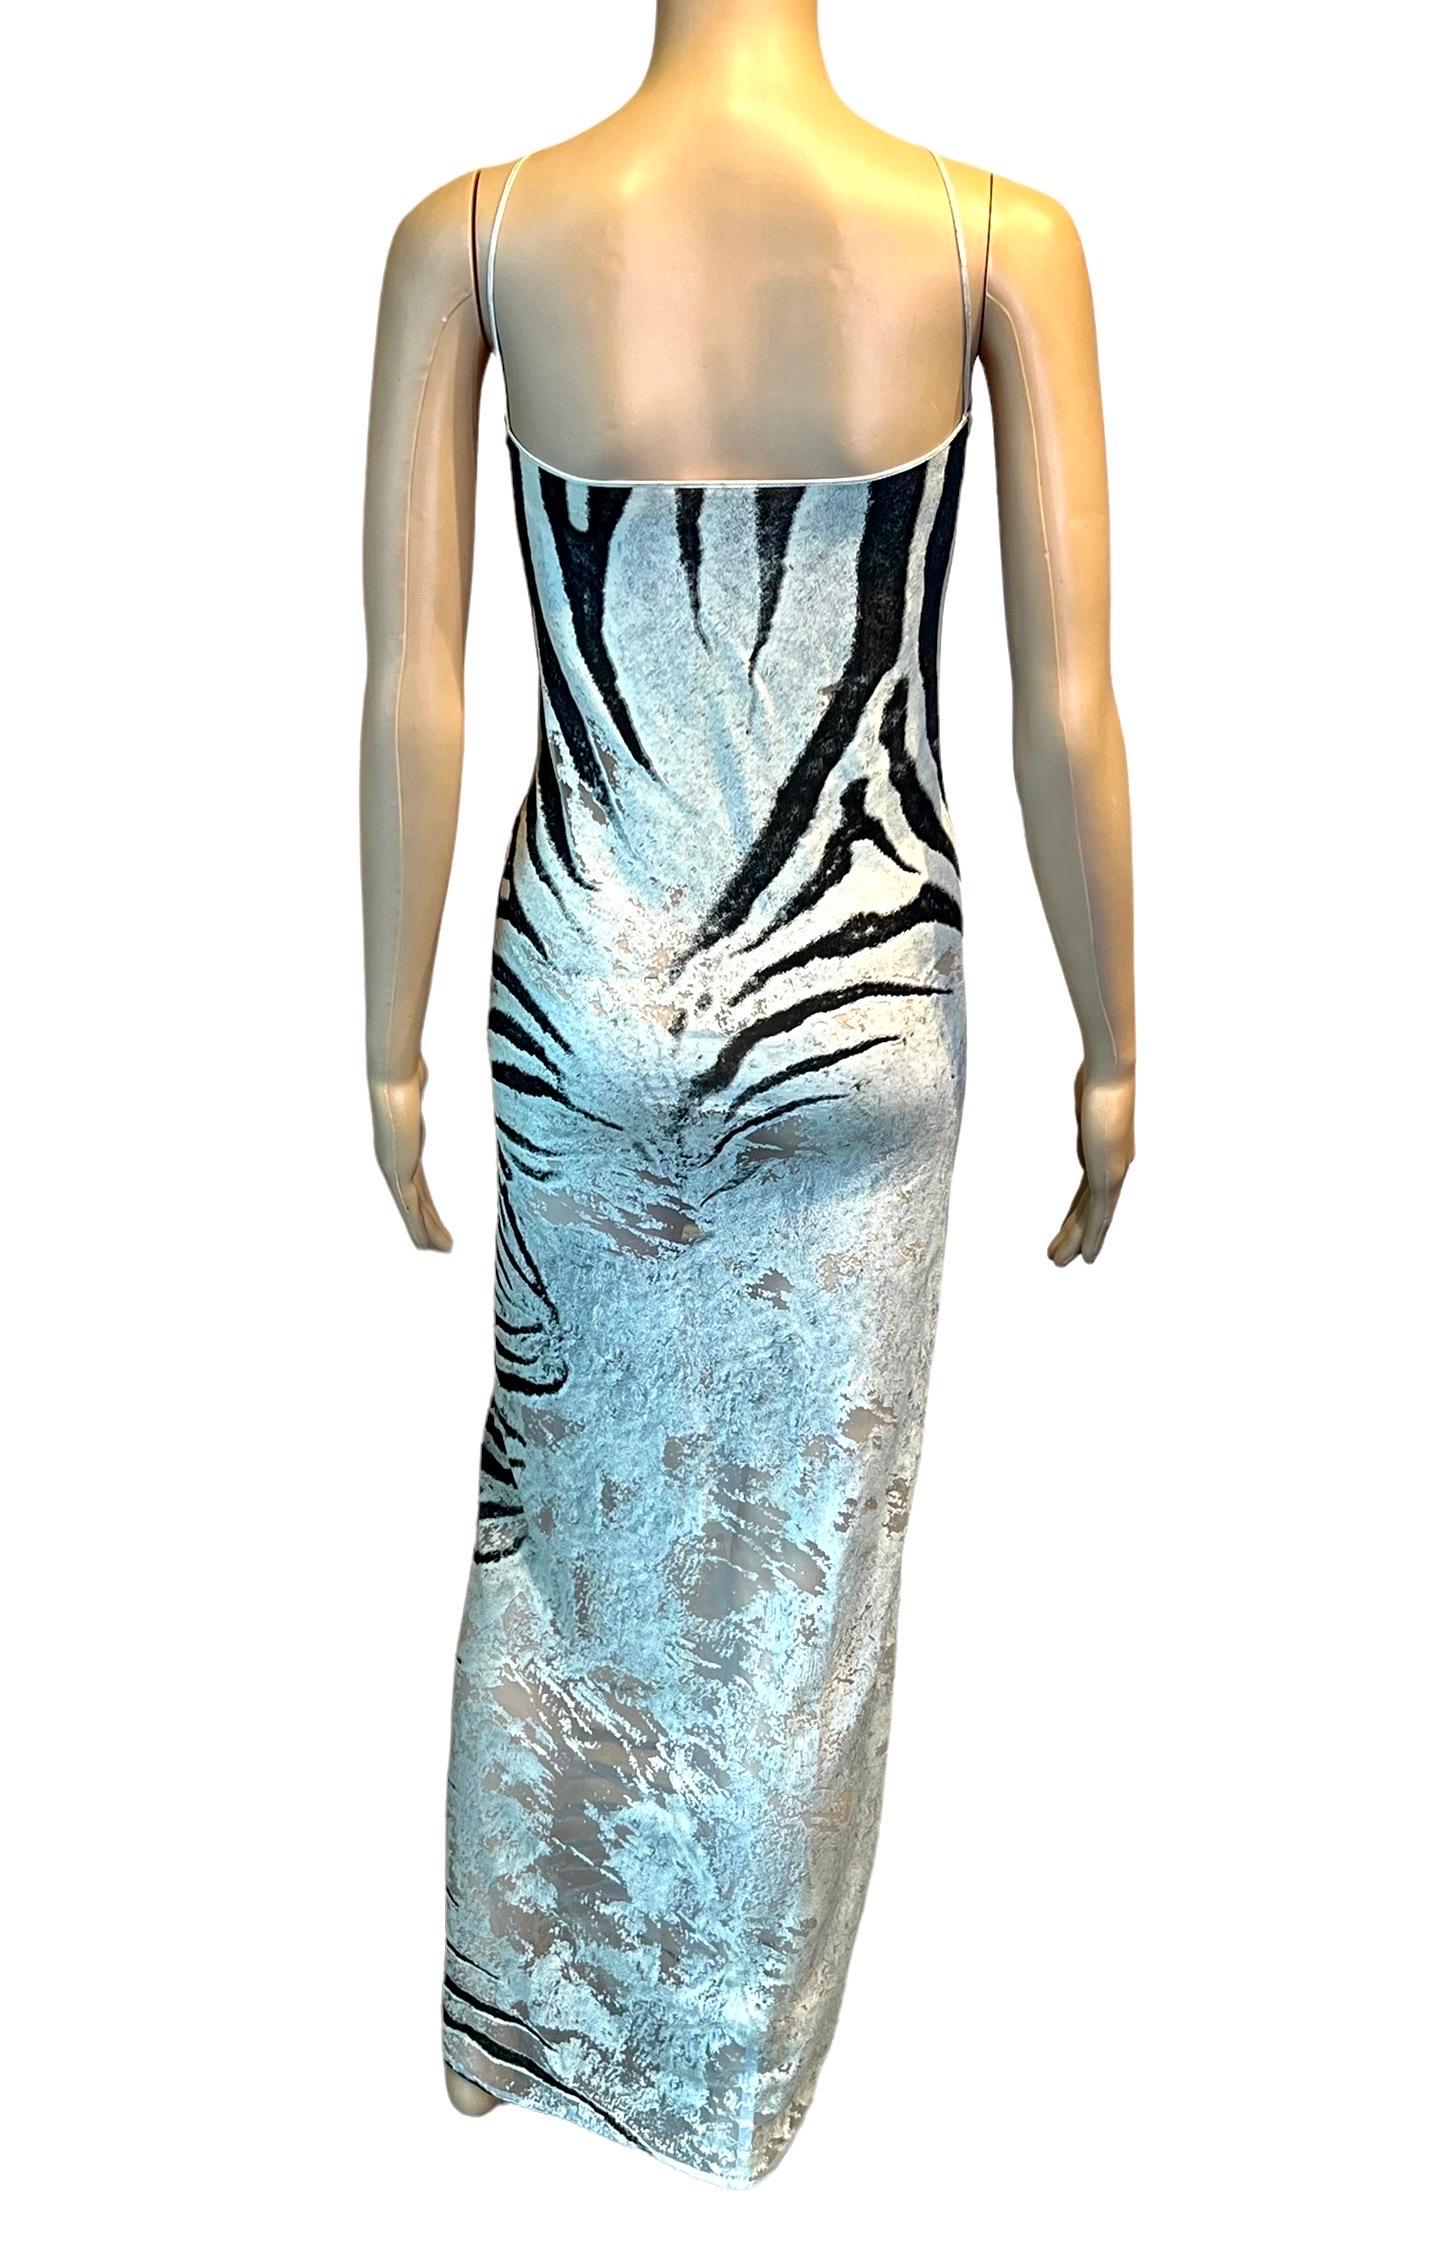 Roberto Cavalli S/S 1999 Runway Sheer Mesh Zebra Print Slip Evening Dress Gown Size M

FOLLOW US ON INSTAGRAM @OPULENTADDICT